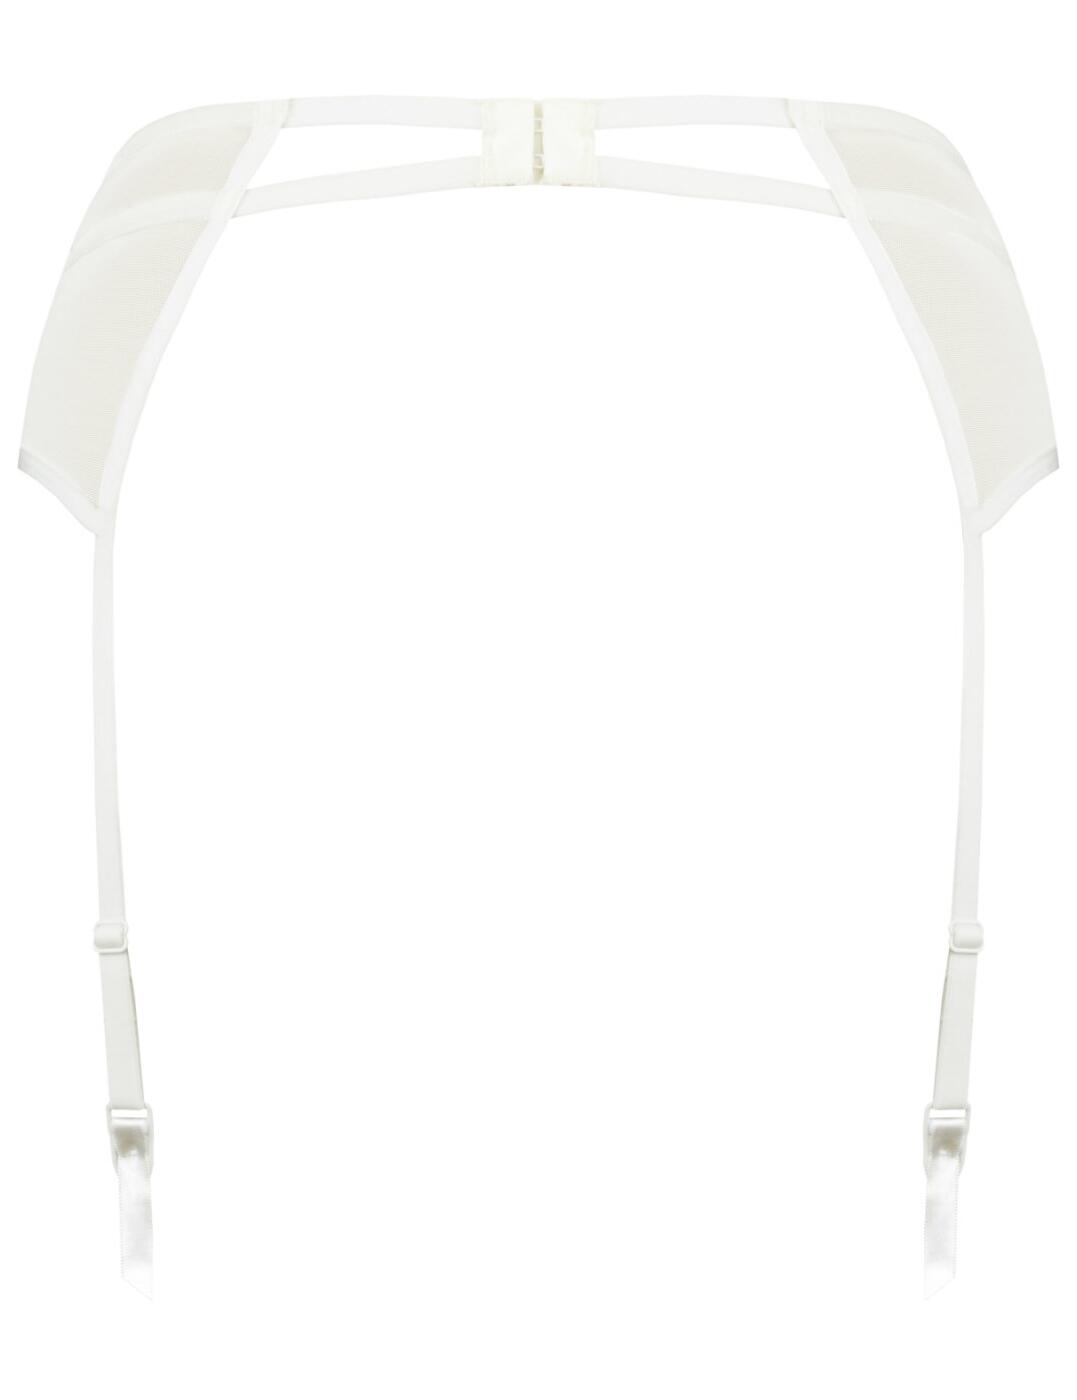 W03XK Wonderbra Refined Glamour Suspender Belt - W03XK Ivory